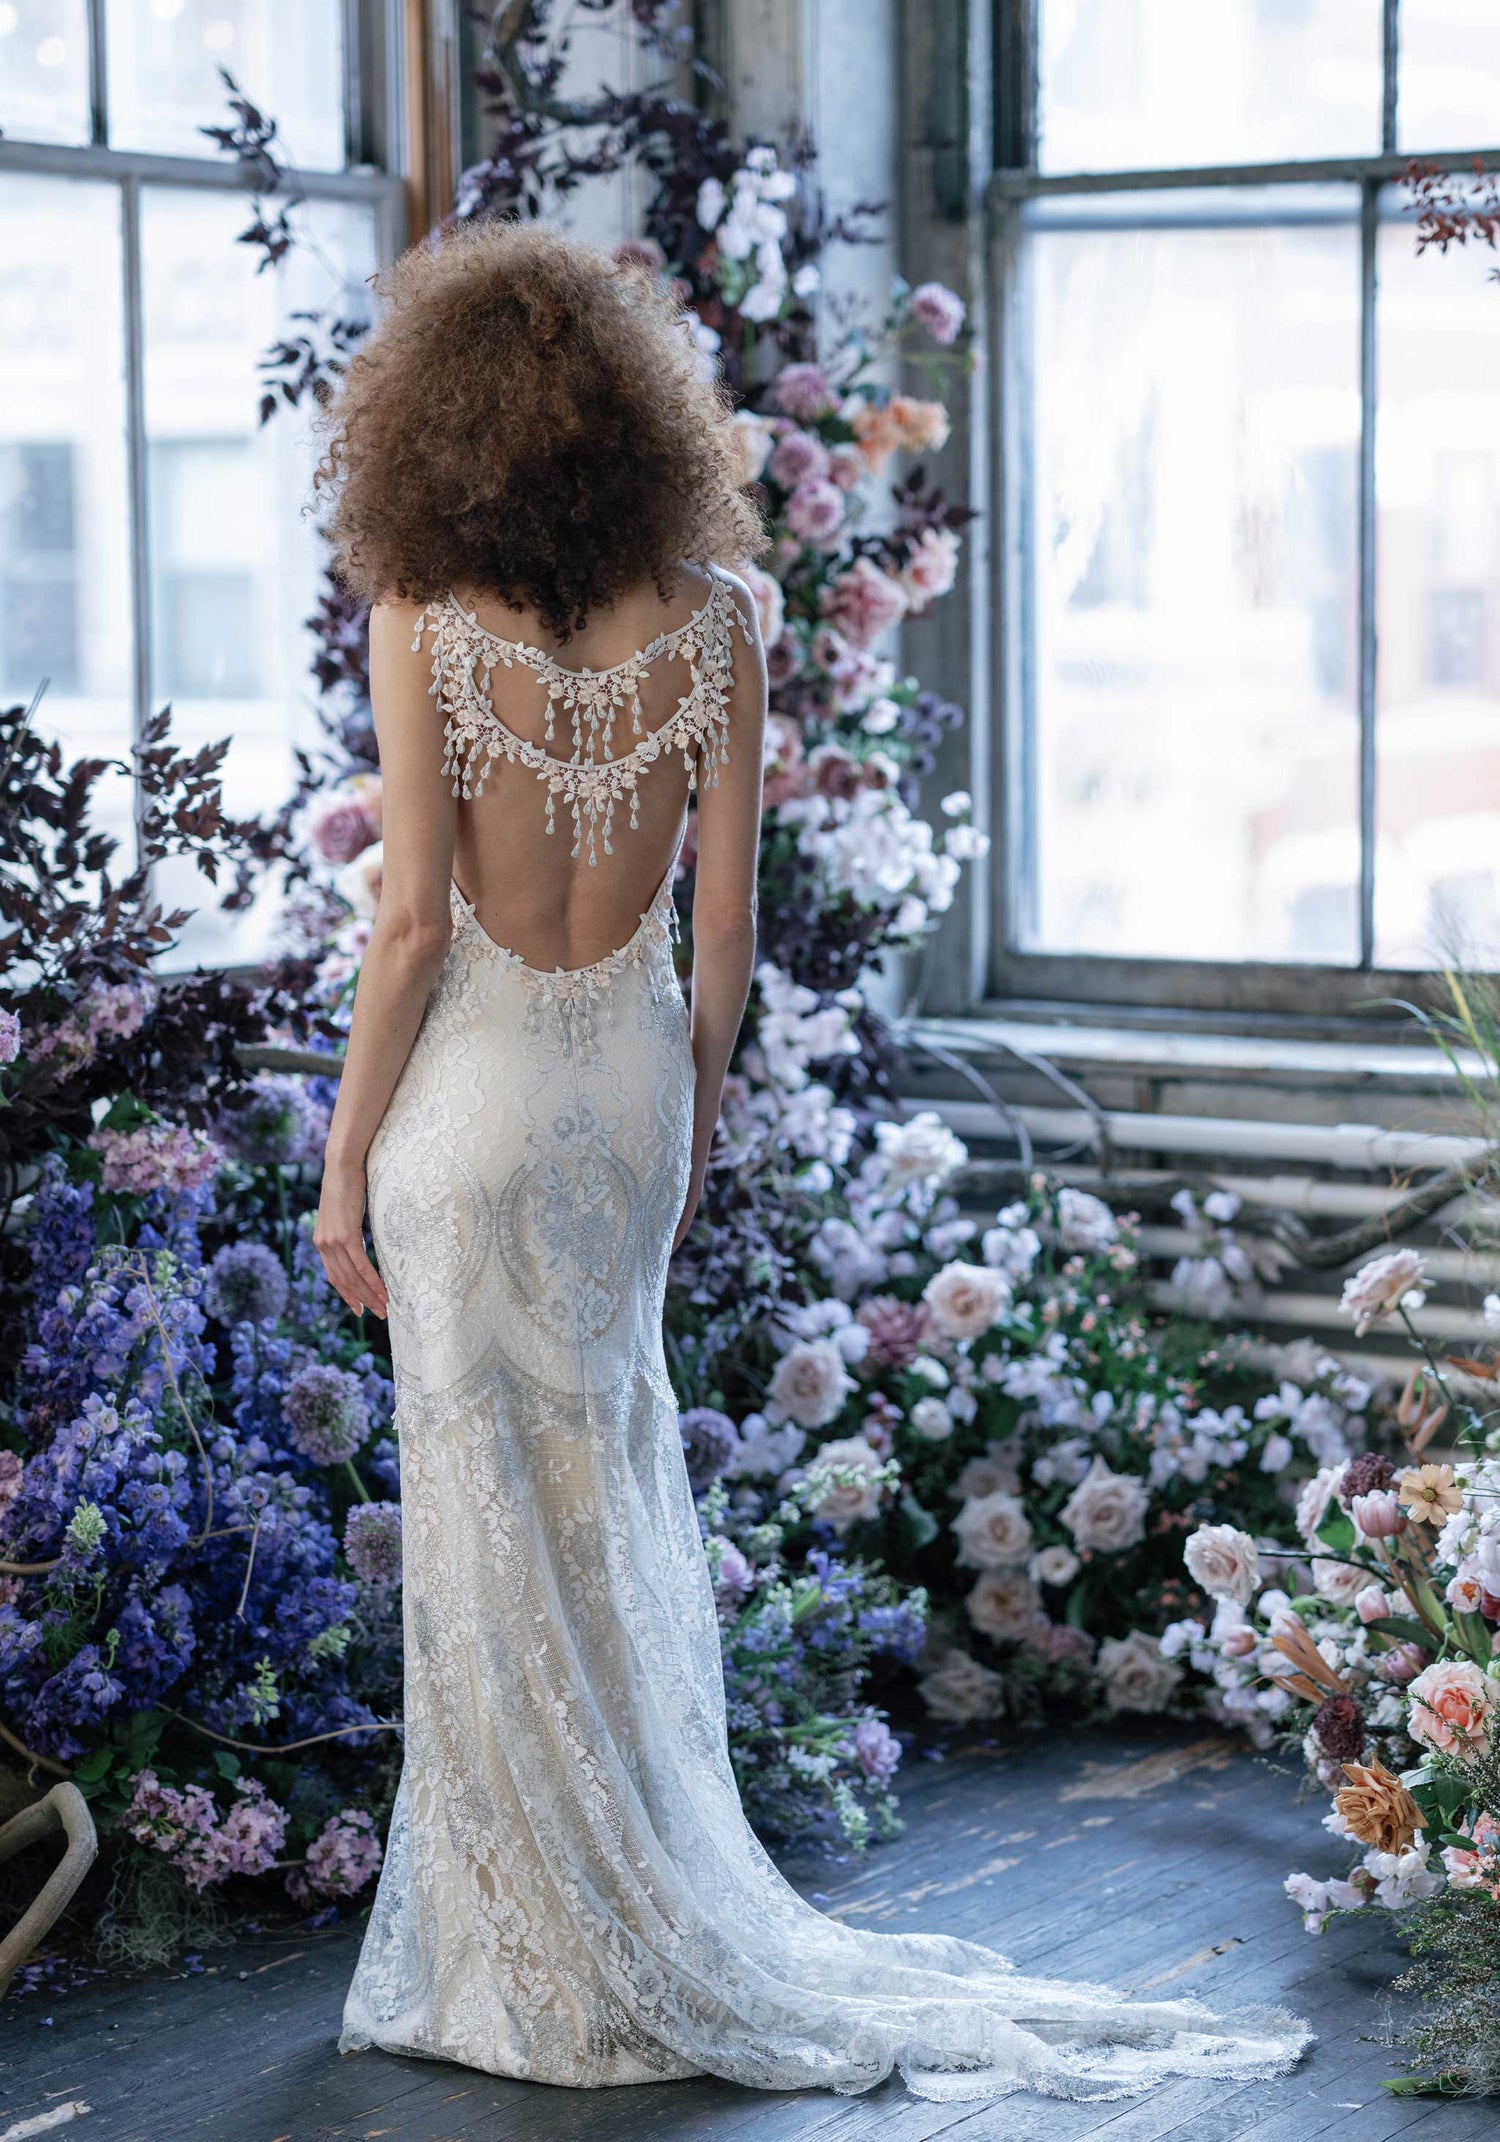 Briolette open back design lace wedding dress sheath style silhouette from Claire Pettibone